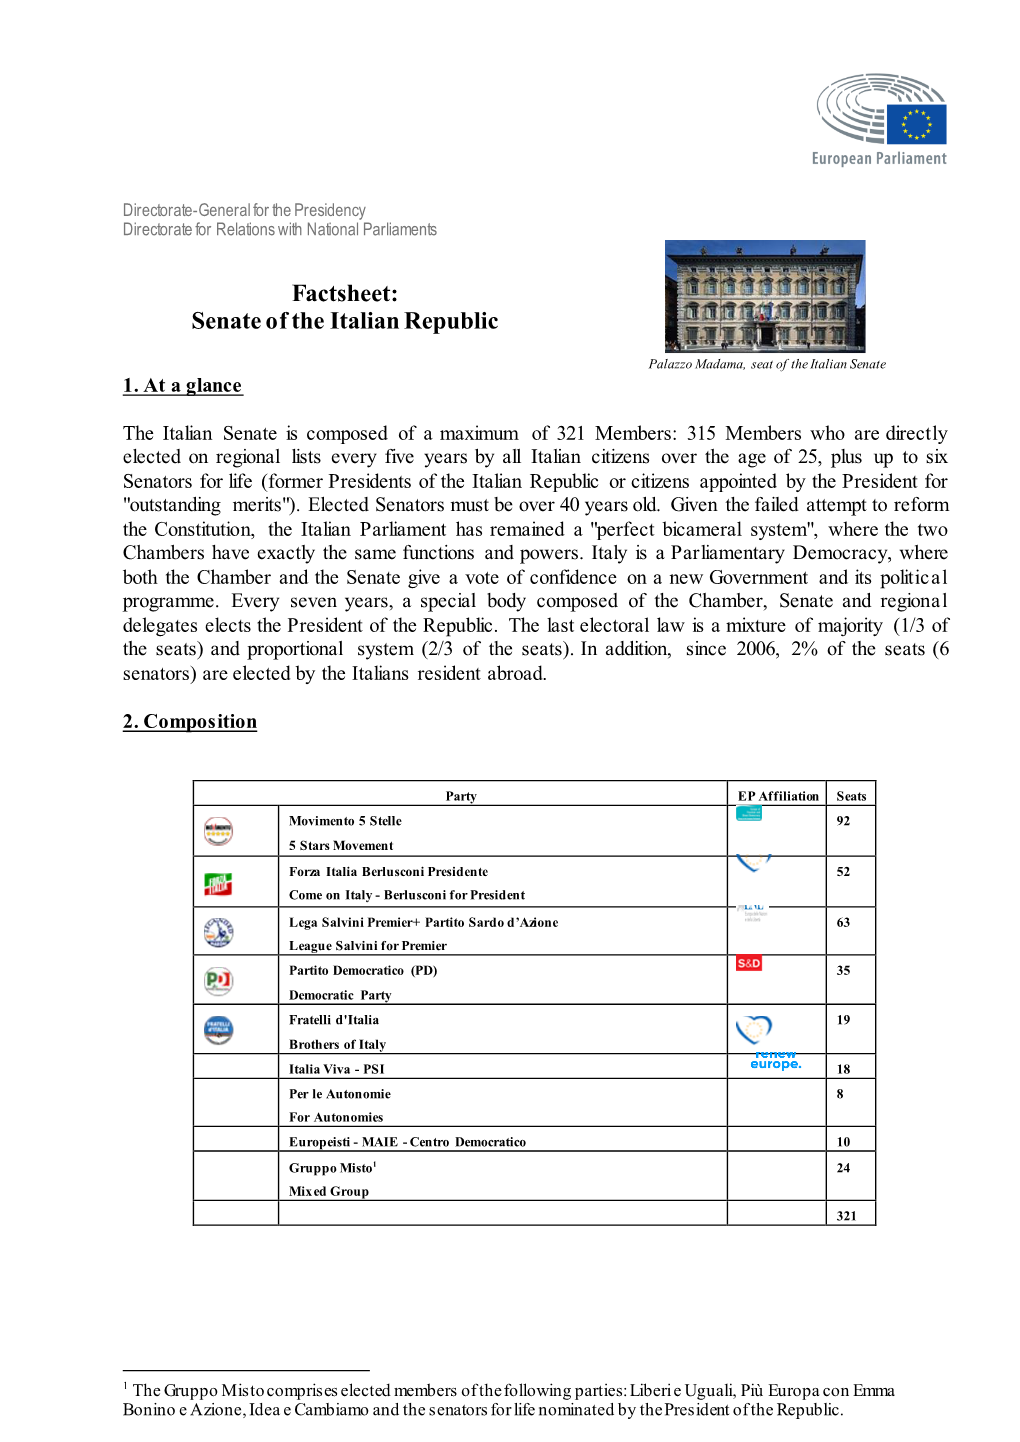 Factsheet: Senate of the Italian Republic